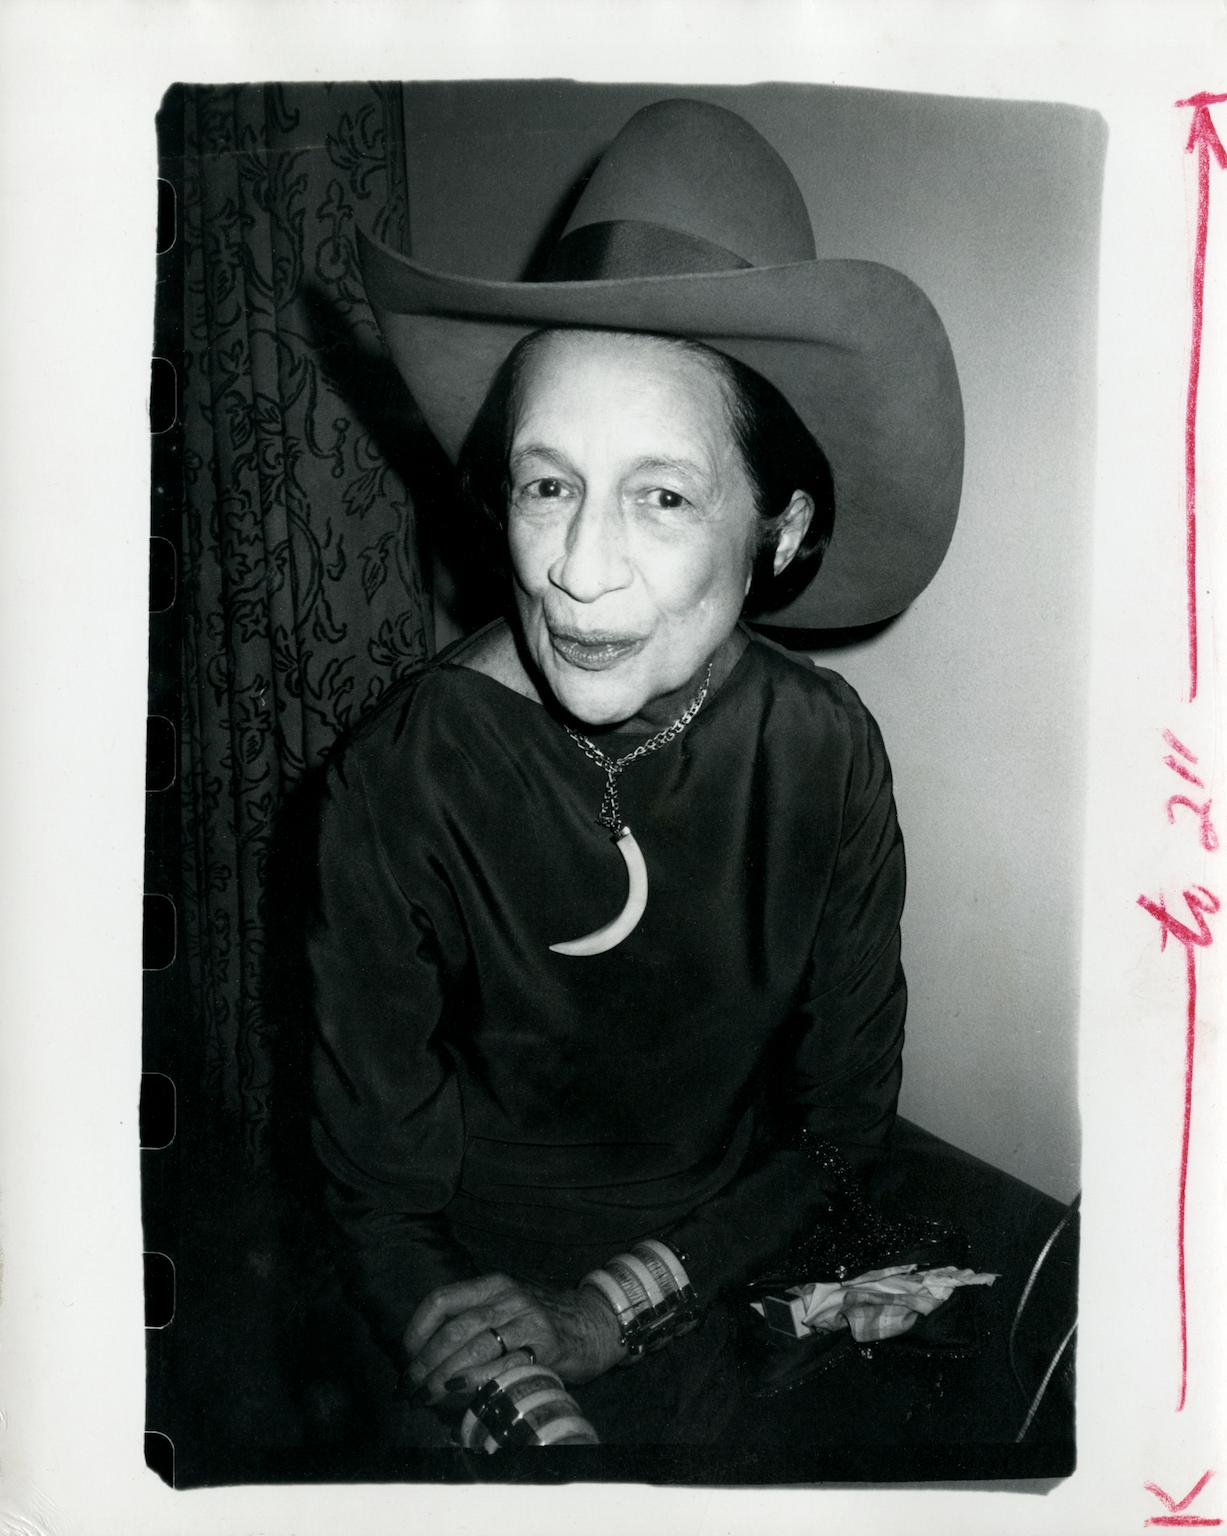 Andy Warhol Portrait Photograph - Diana Vreeland Wearing a Cowboy Hat